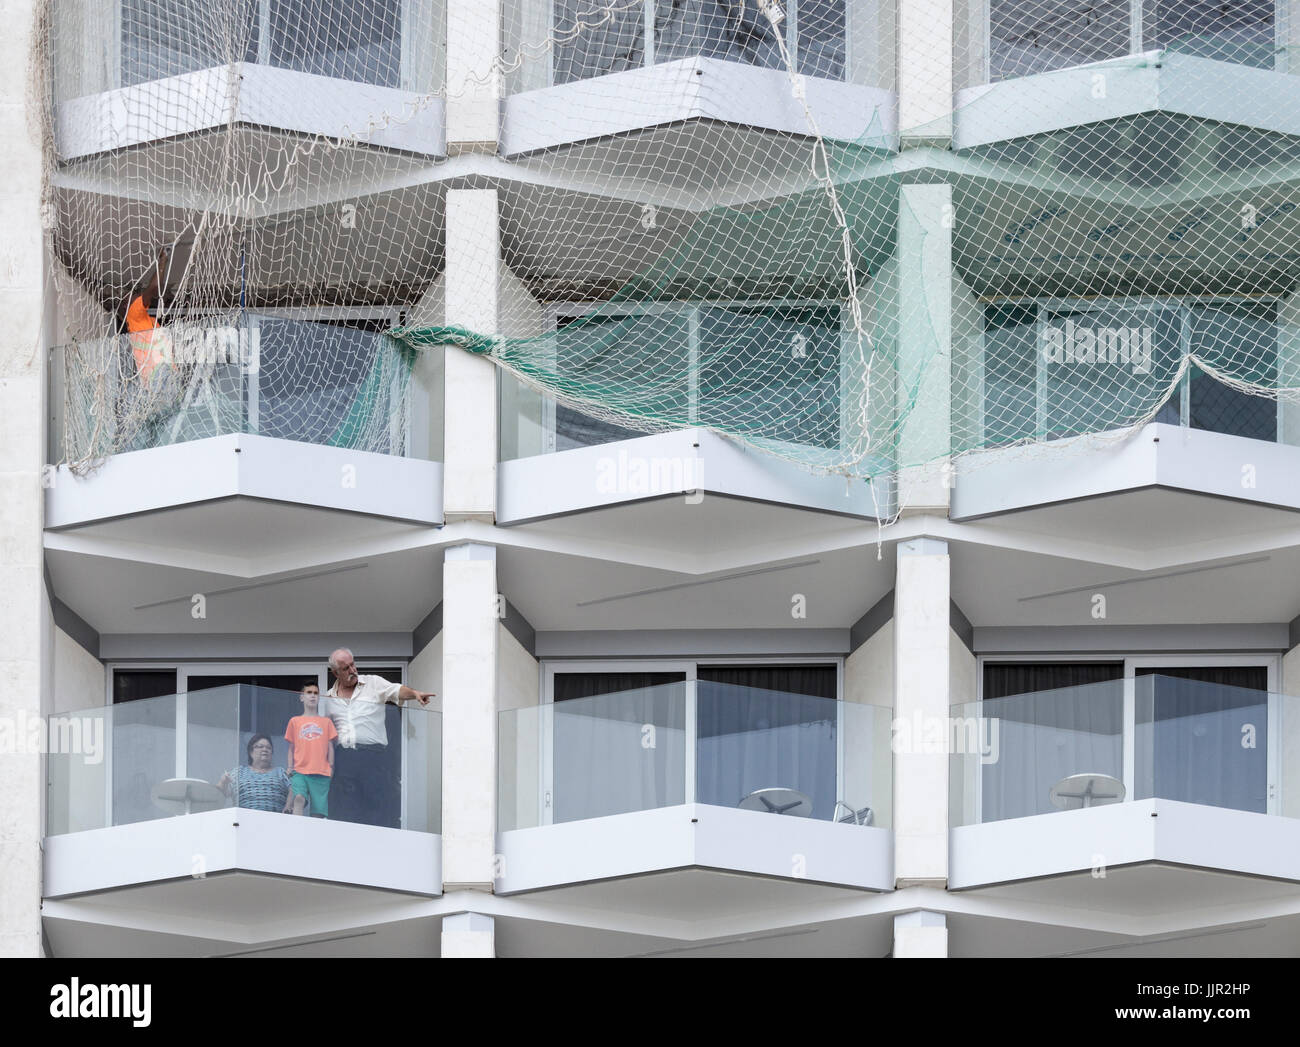 Workmen refurbishing upper floors of hotel in Spain as tourists sit on balconies on lower floors. Stock Photo